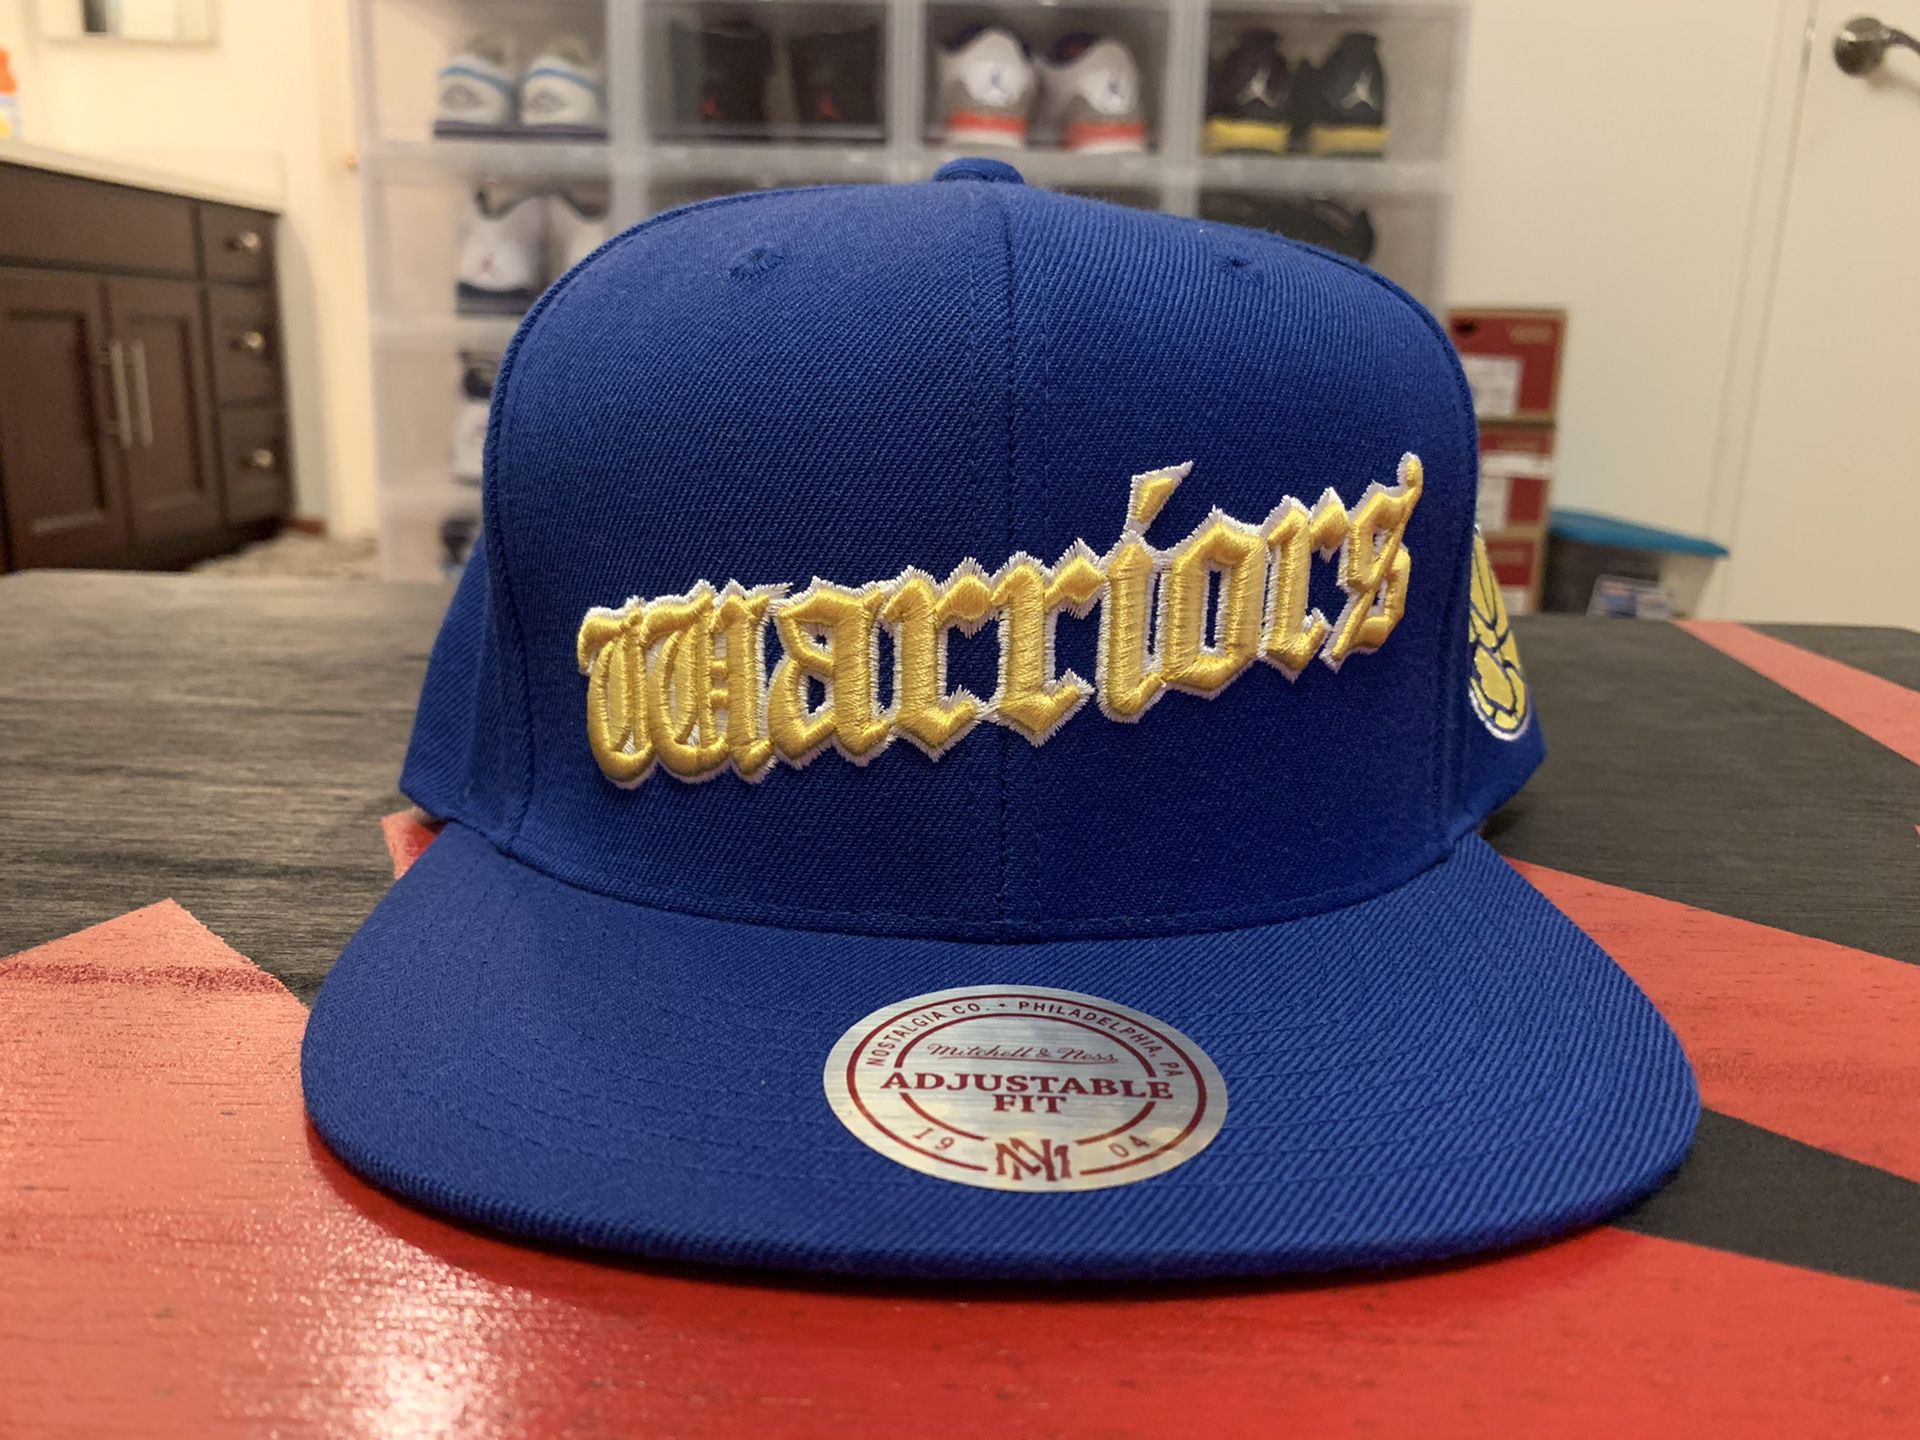 Warriors Mitchell & Ness SnapBack hat